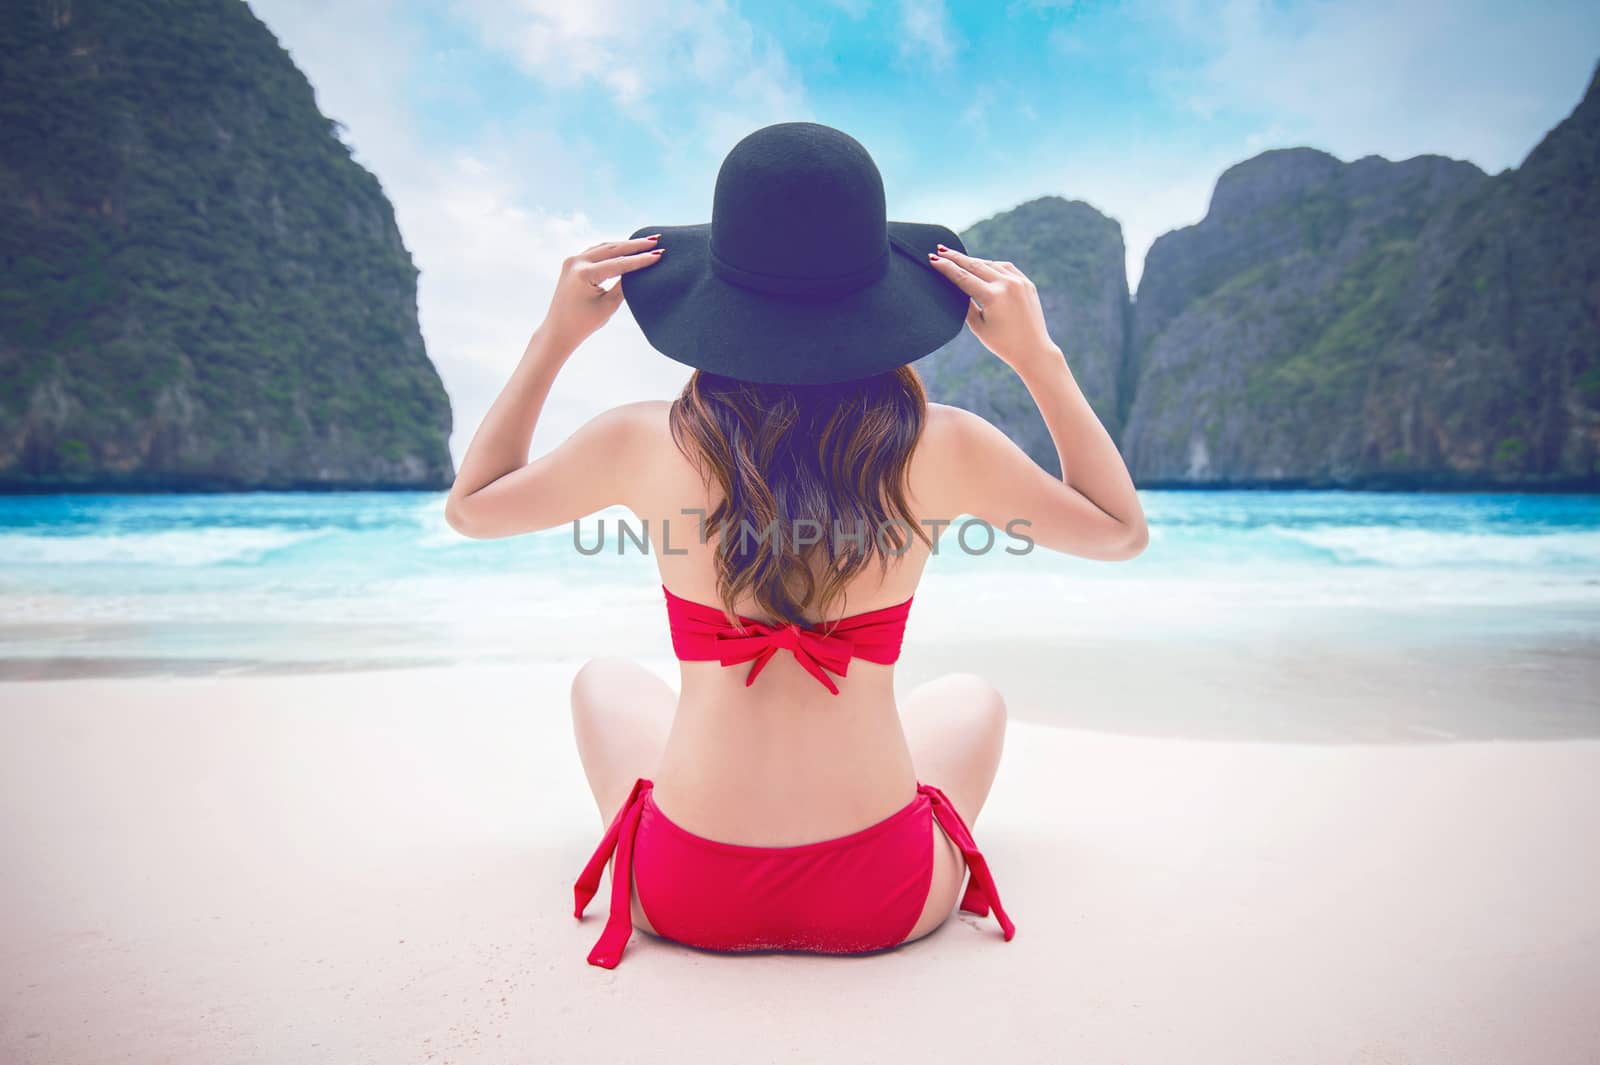 Young woman in red bikini sitting on the beach. Vintage tone.